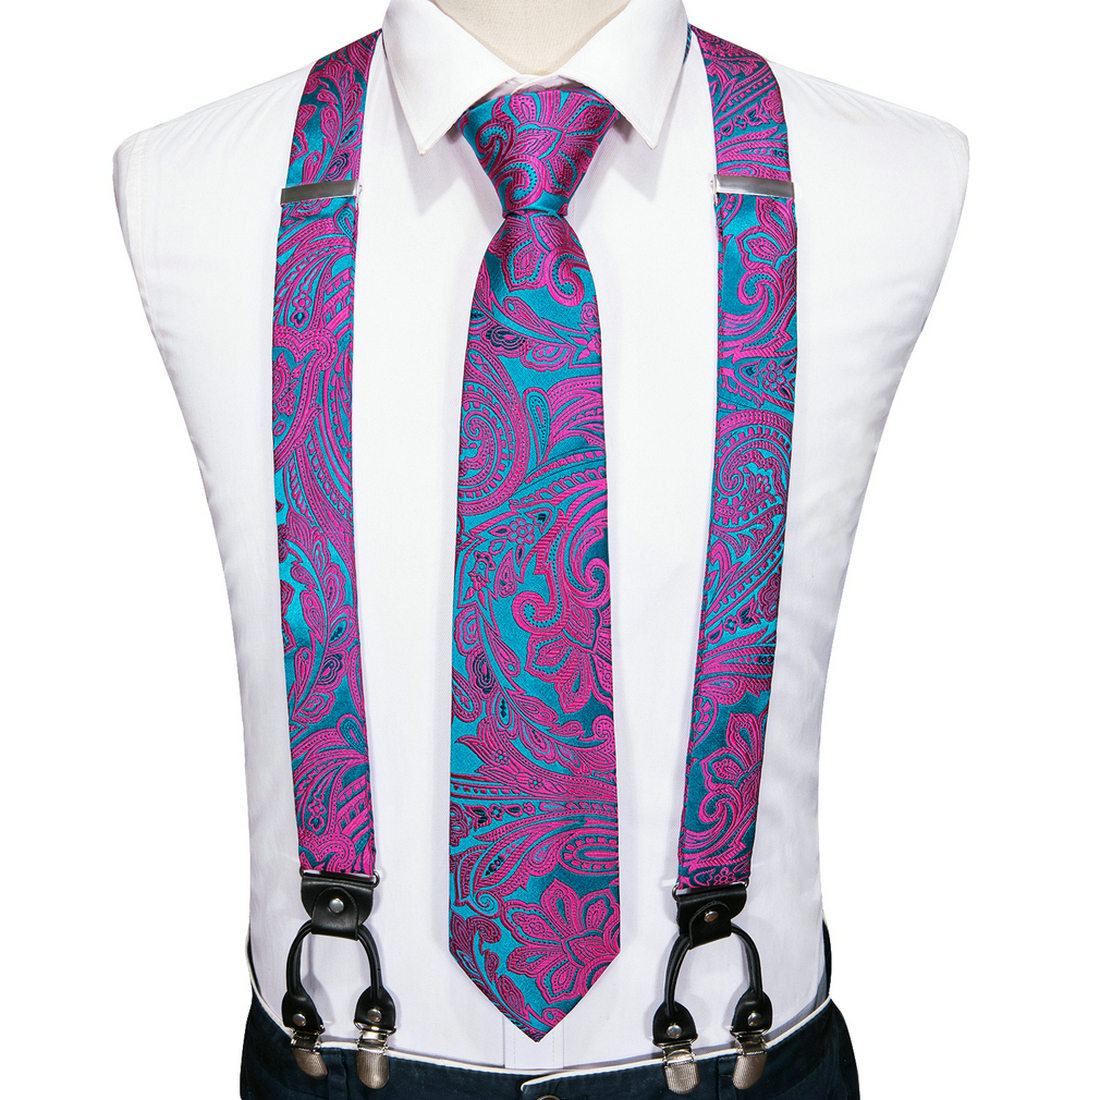 Black Golden Floral Y Back Adjustable Suspenders Tie Set